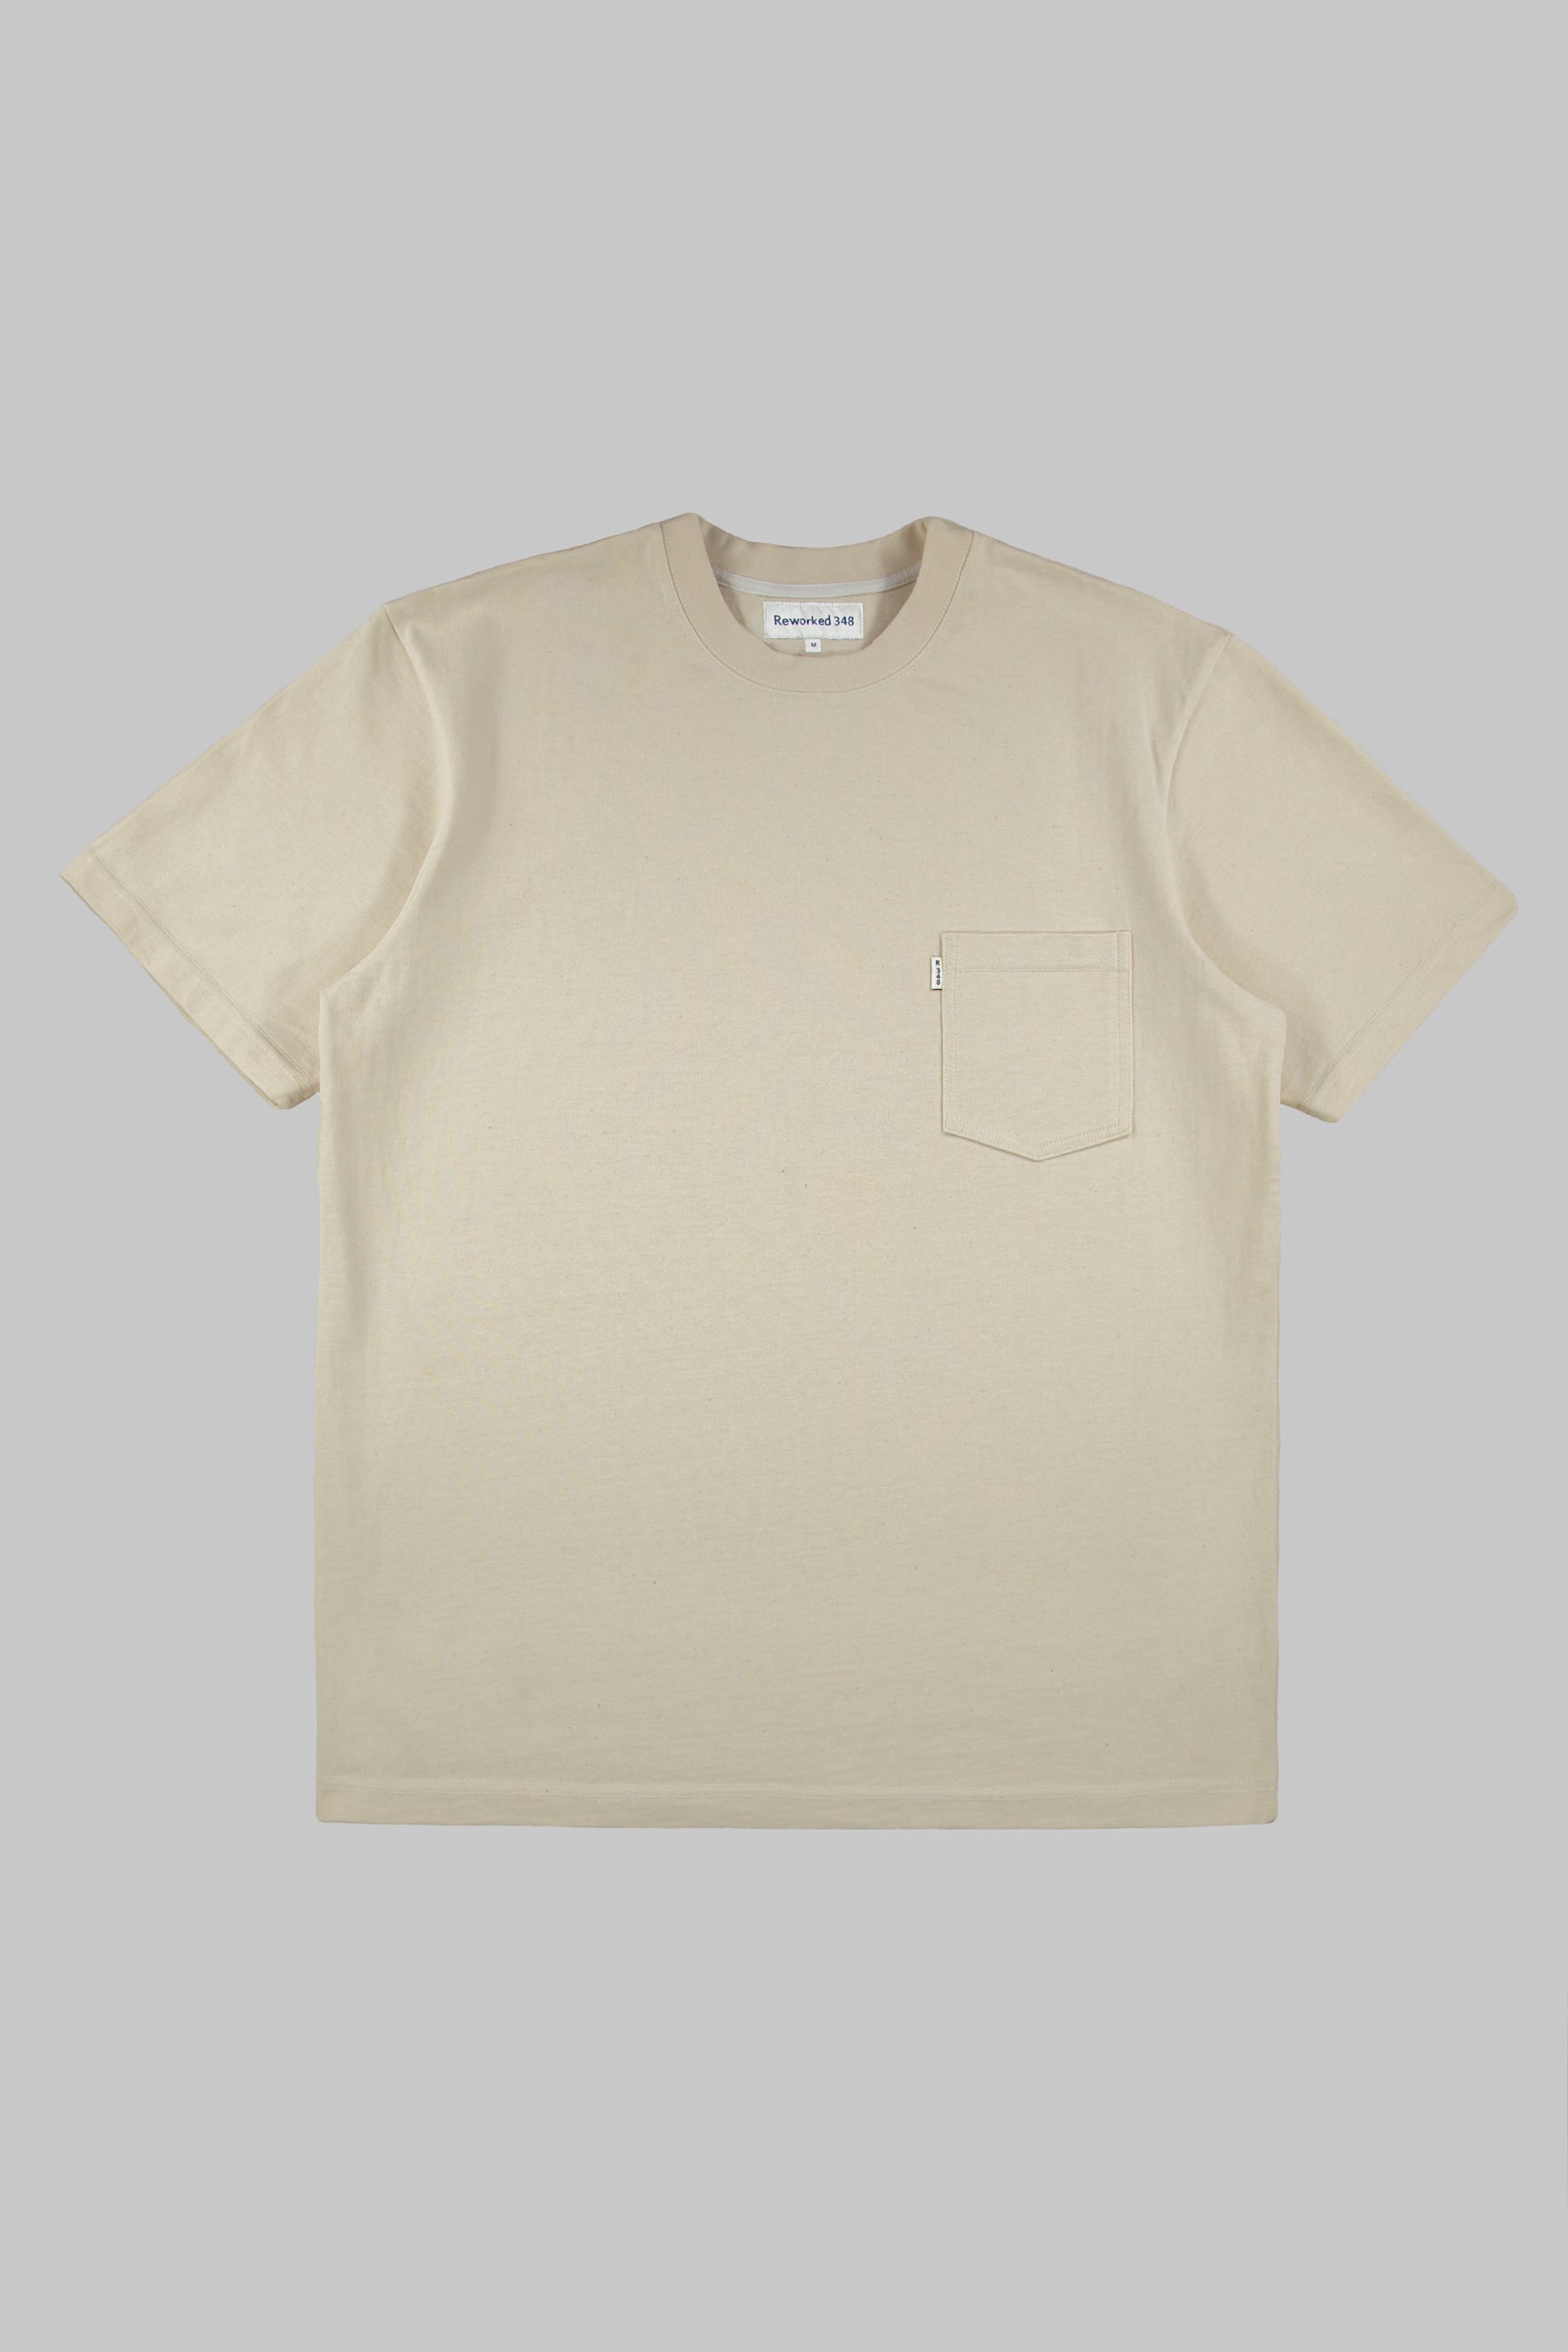 Pocket T-Shirt Natural Ecru